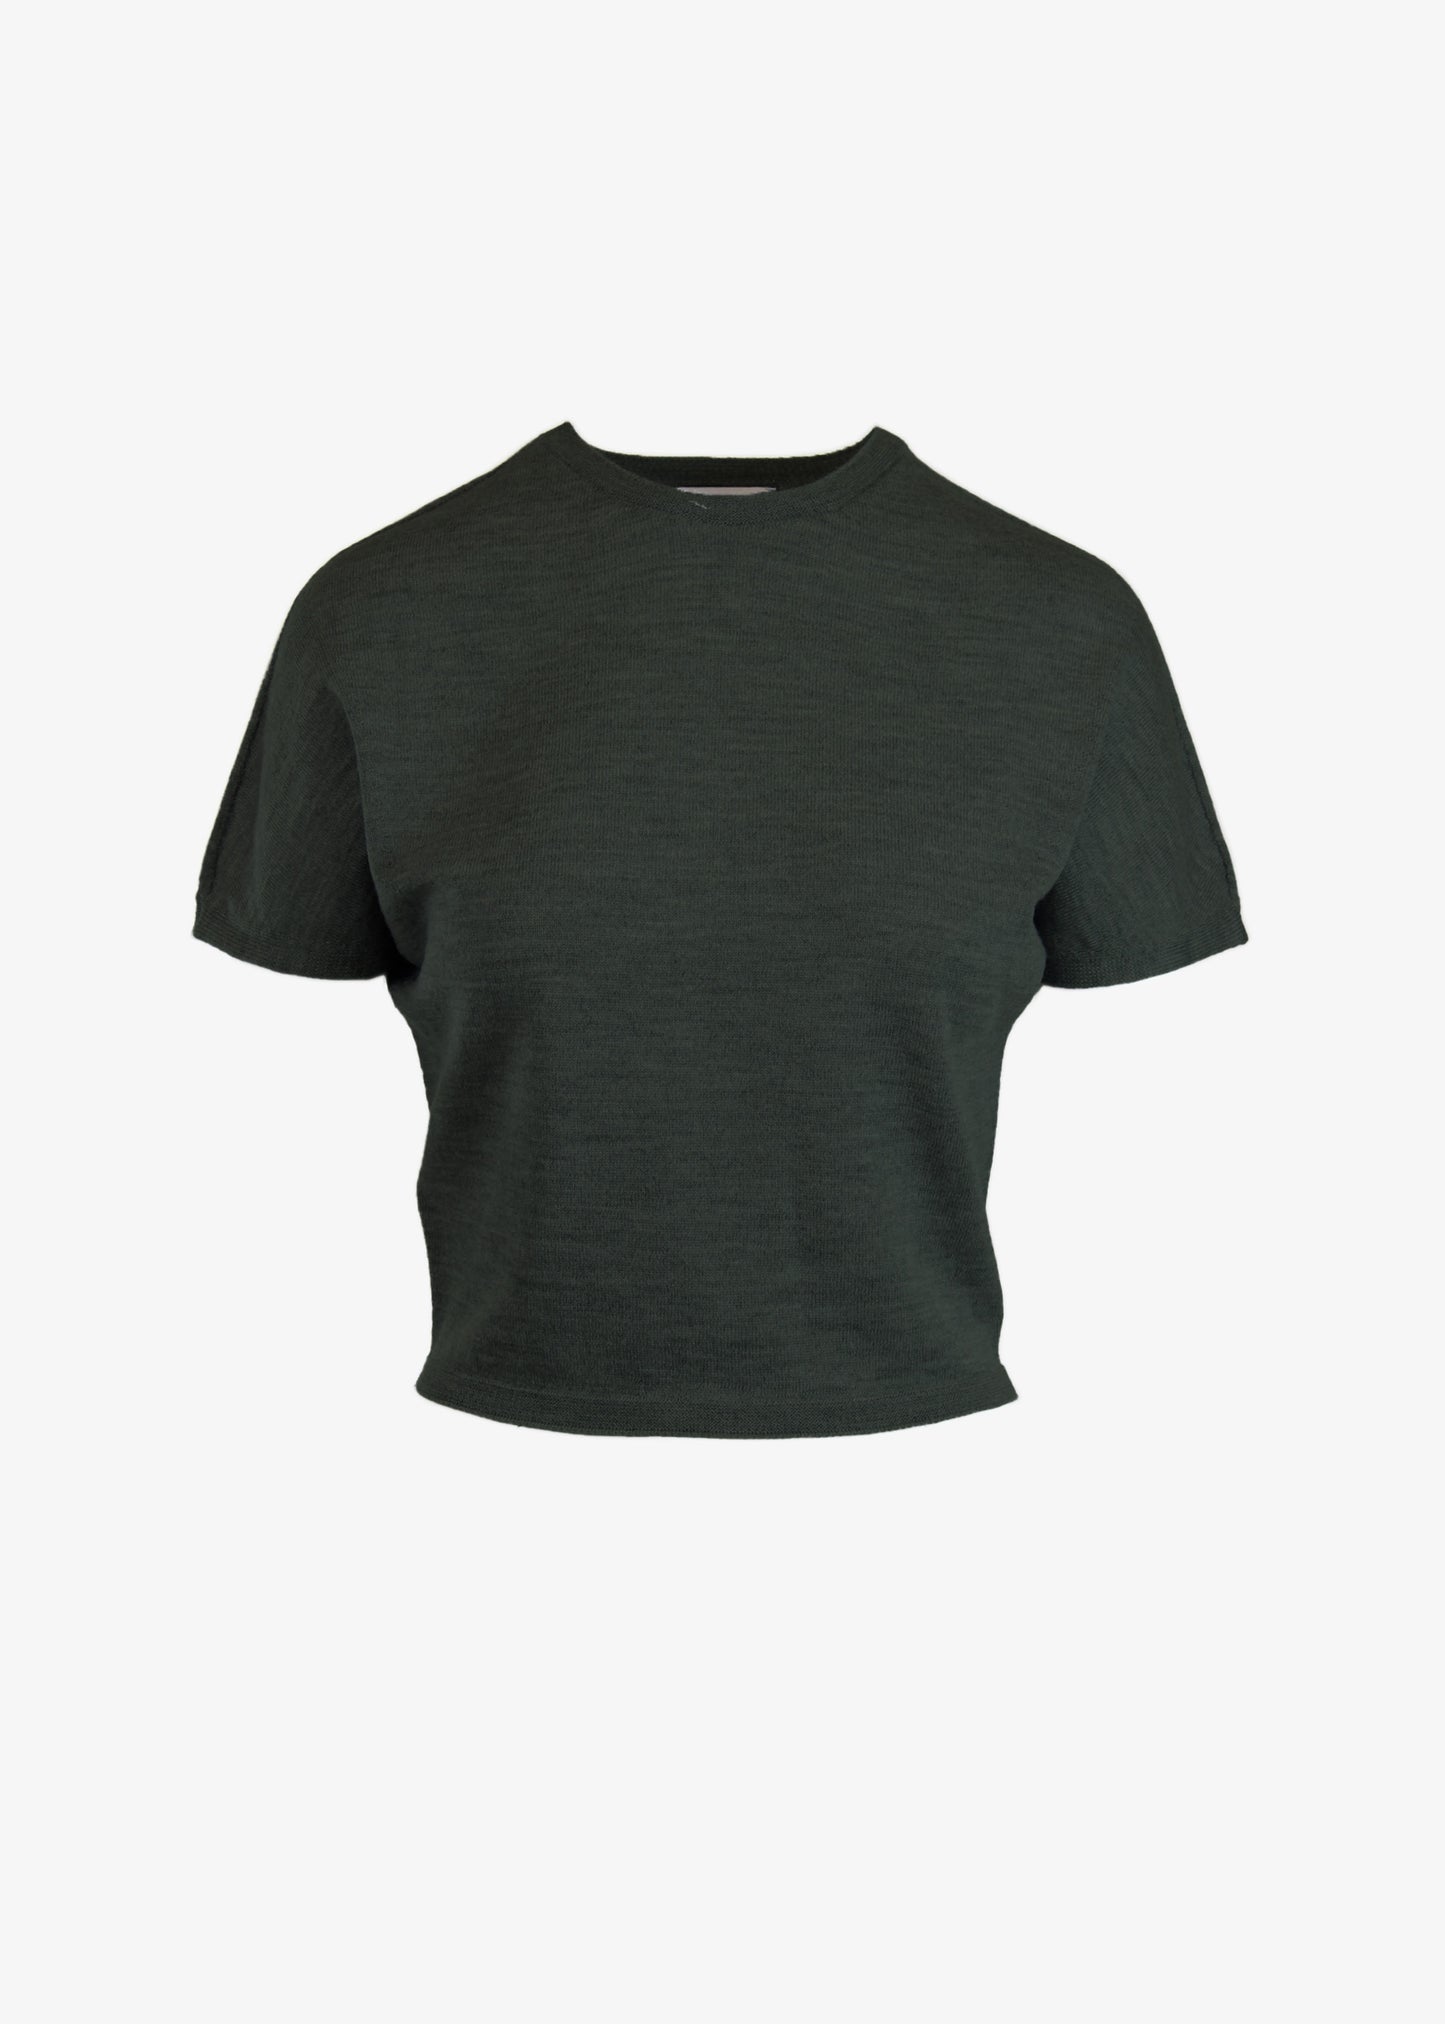 Cropped Merino Wool T-Shirt